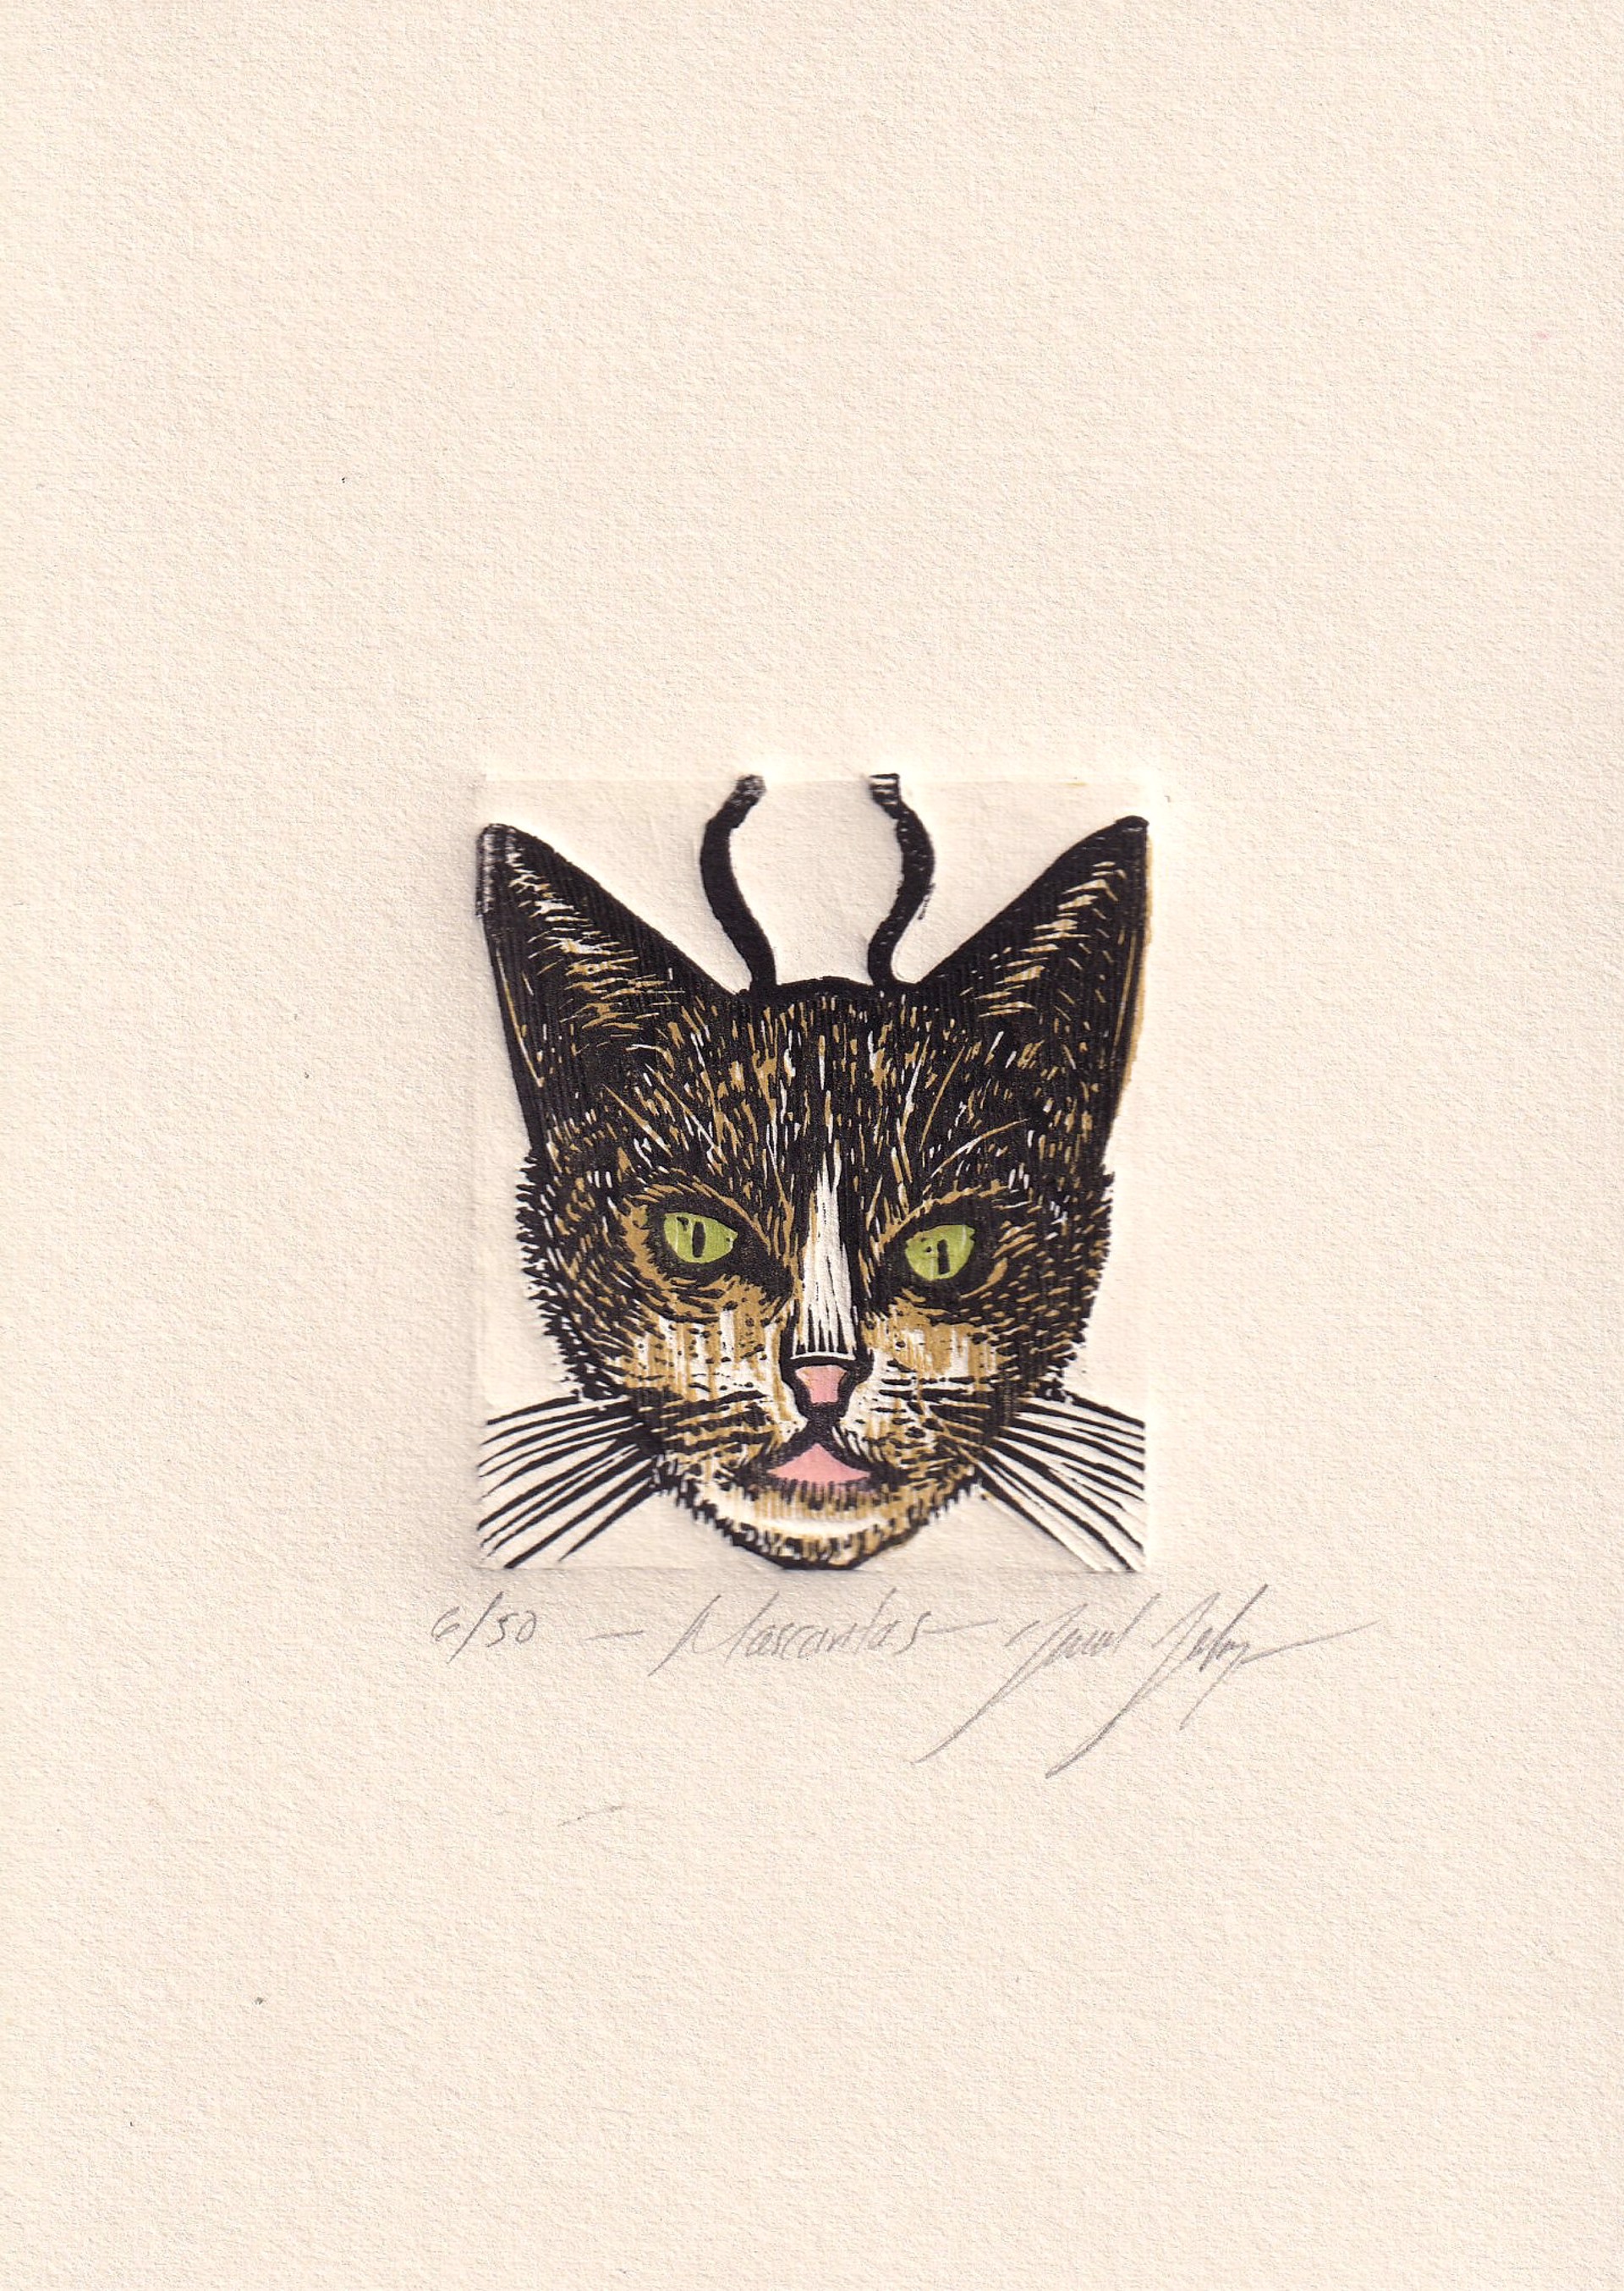 Mascaritas (Gato) by Daniel Salazar